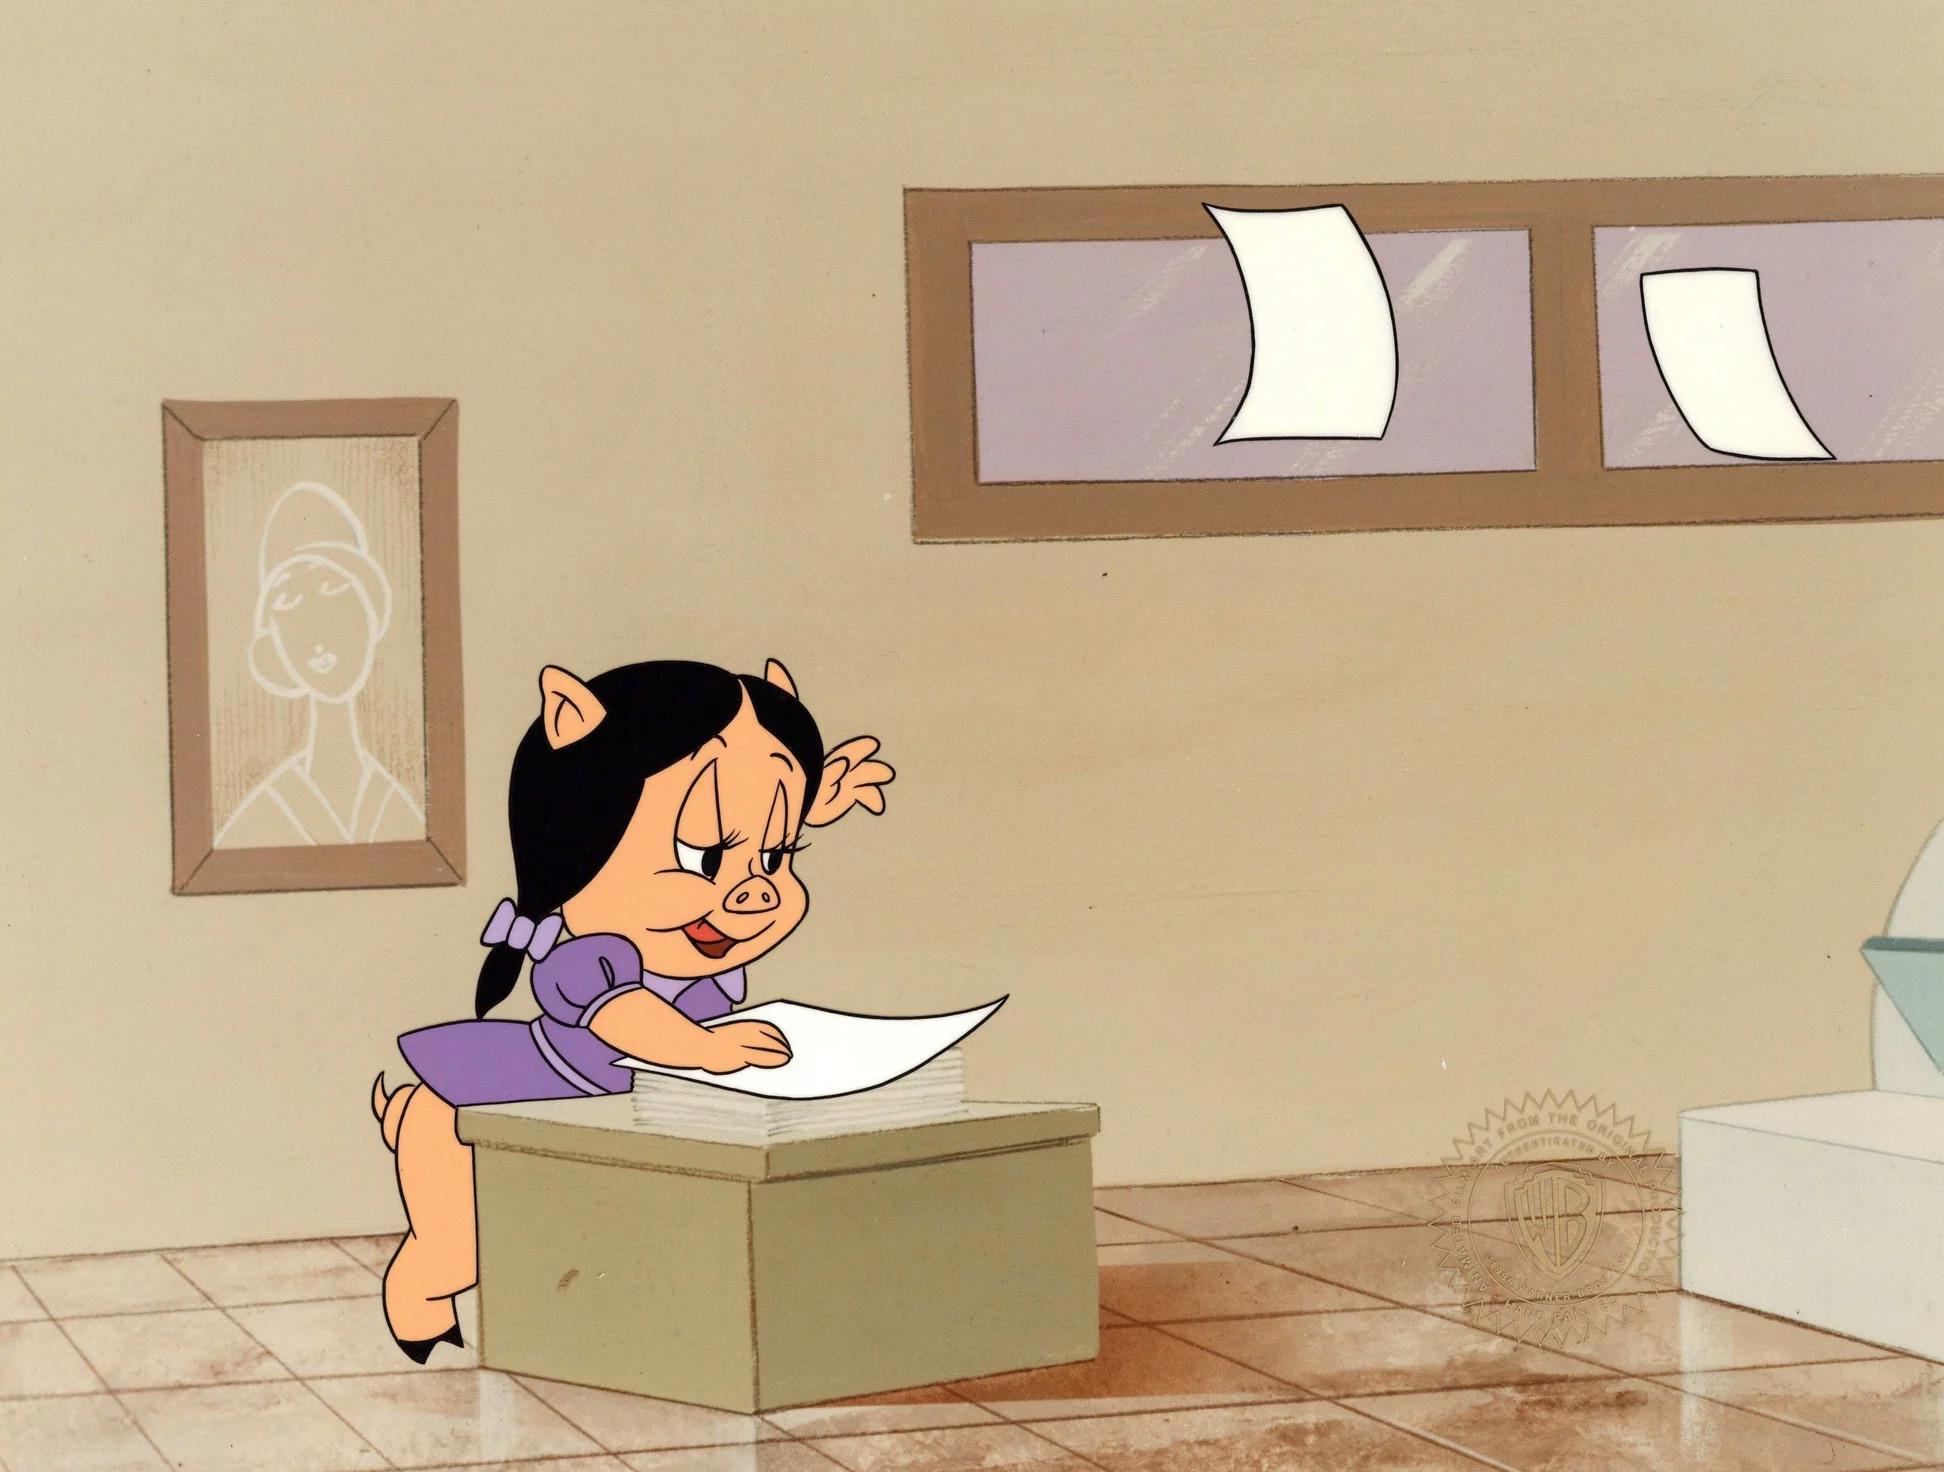 Looney Tunes Original Production Cel: Petunia Pig - Art by Looney Tunes Studio Artists